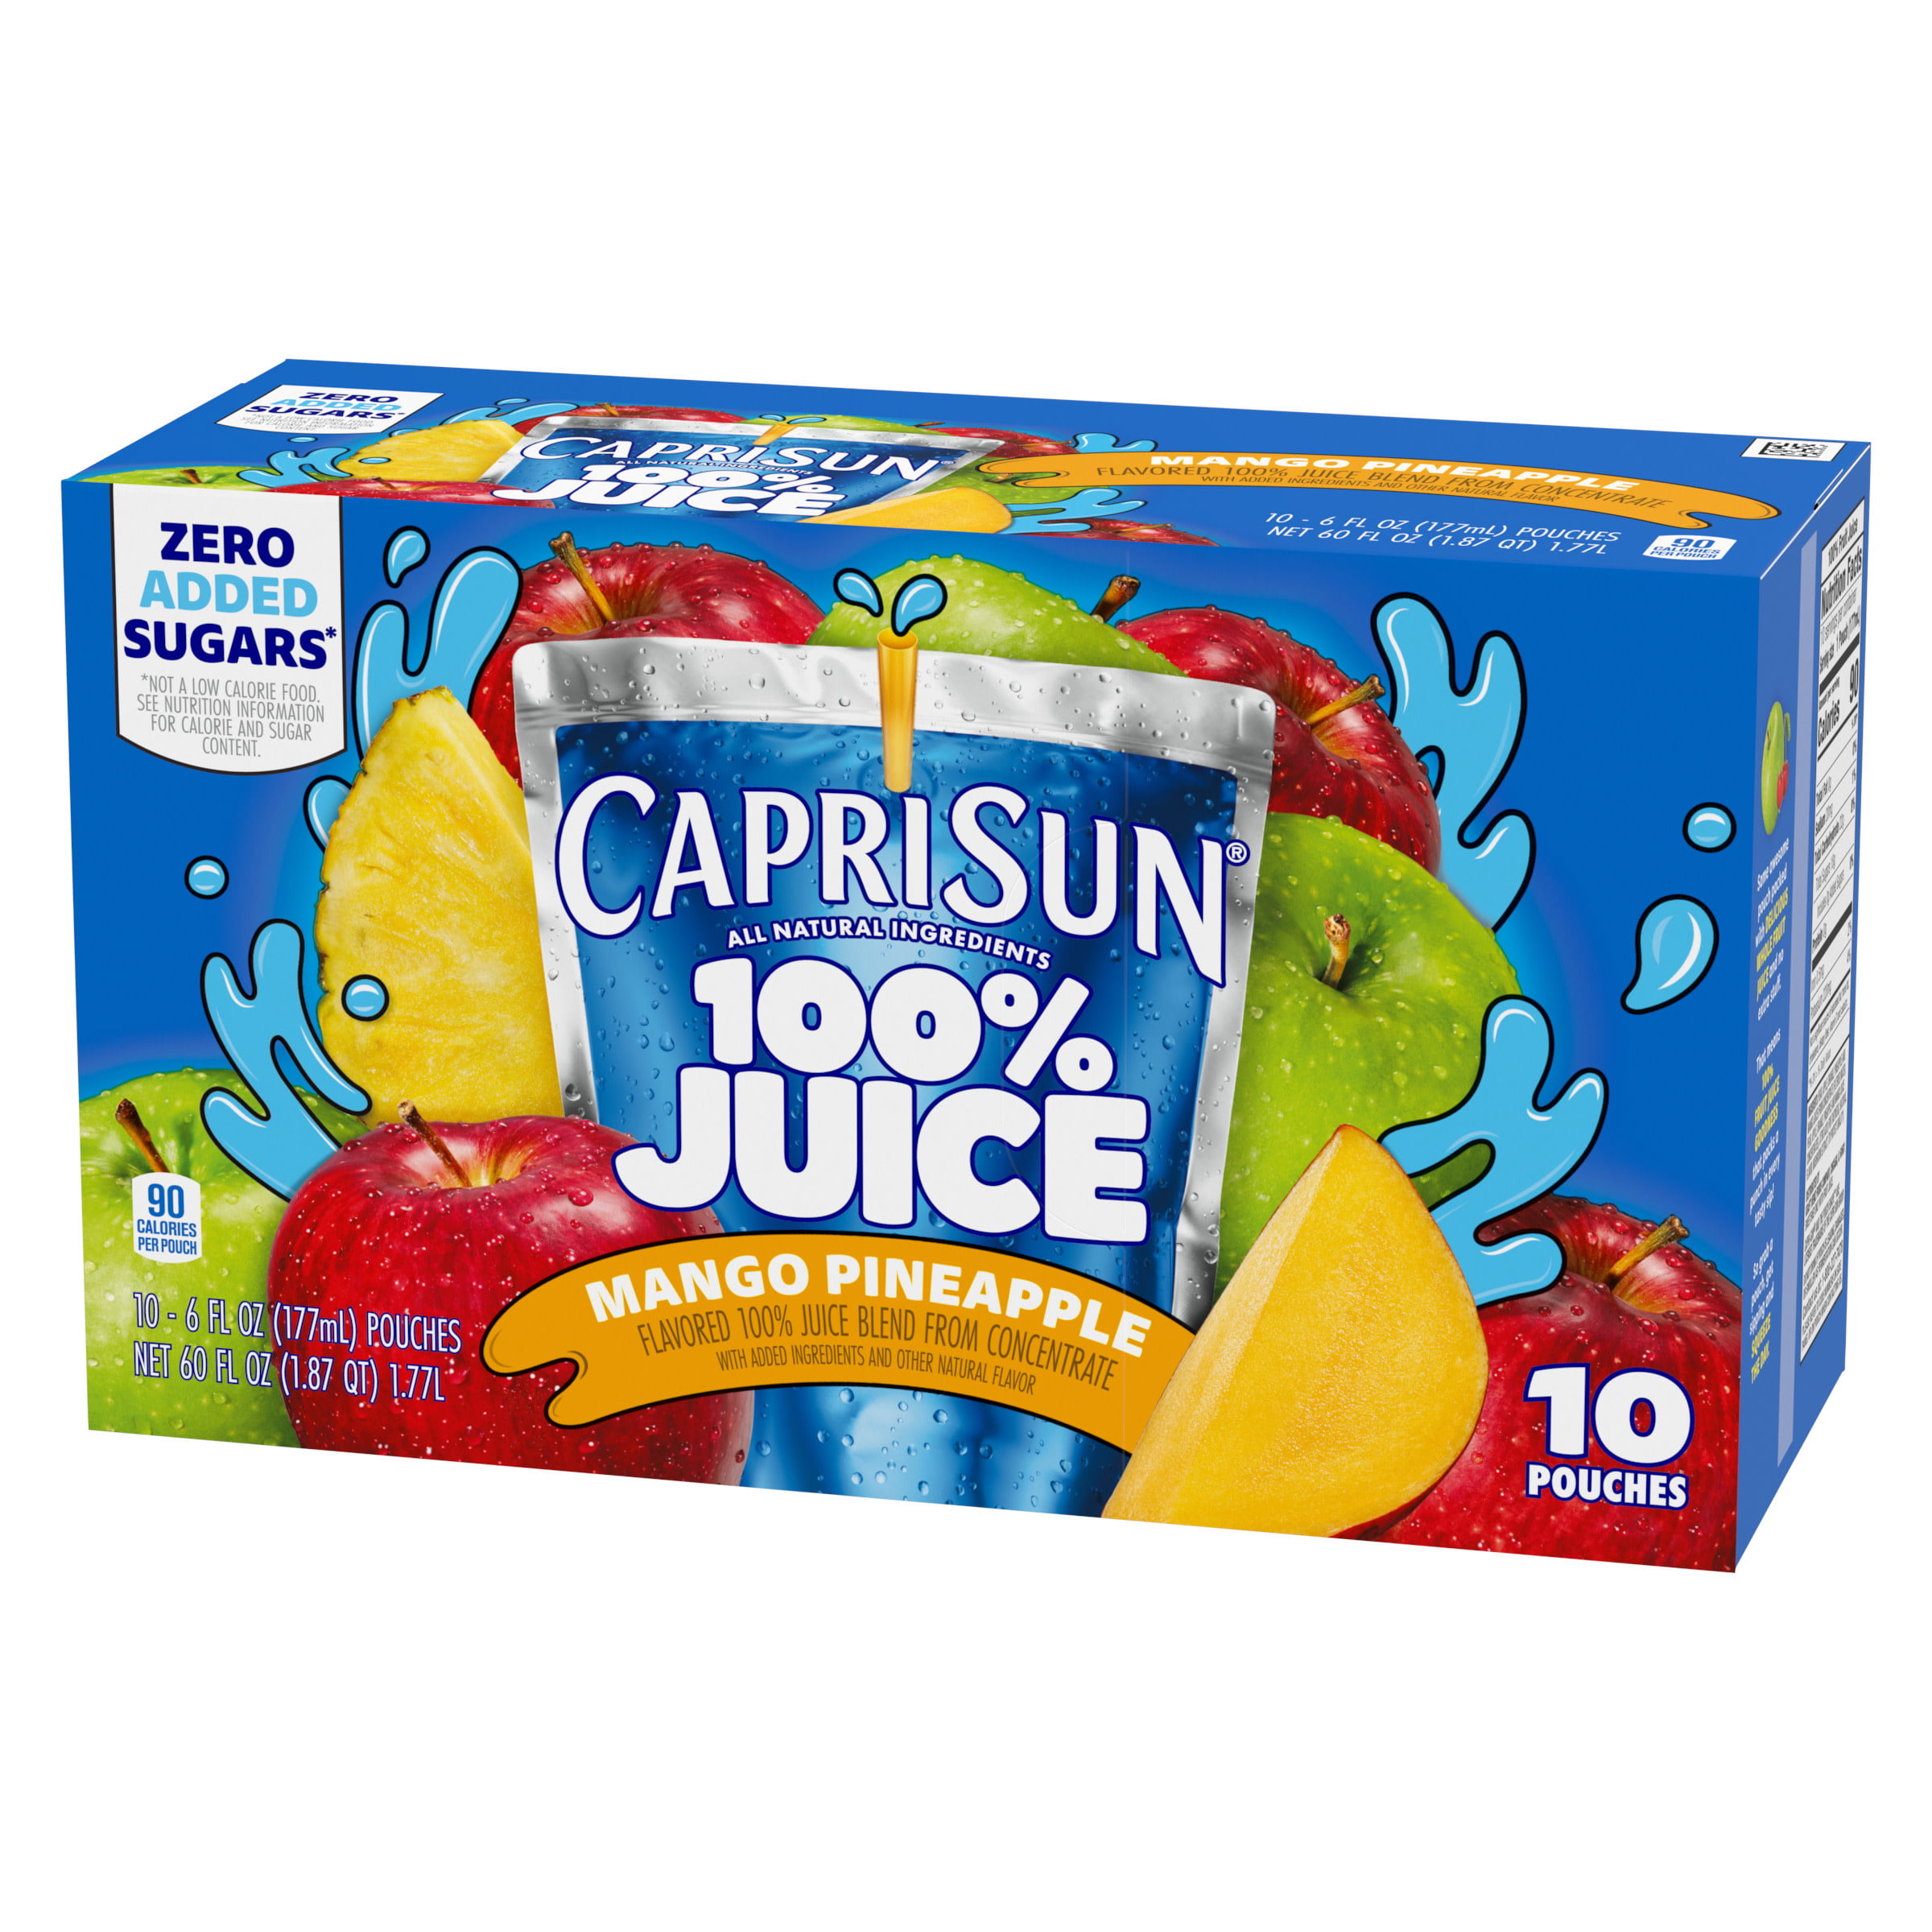 Capri Sun 100% Juice, Mango Pineapple, Paw Patrol - 10 pack, 6 fl oz pouches